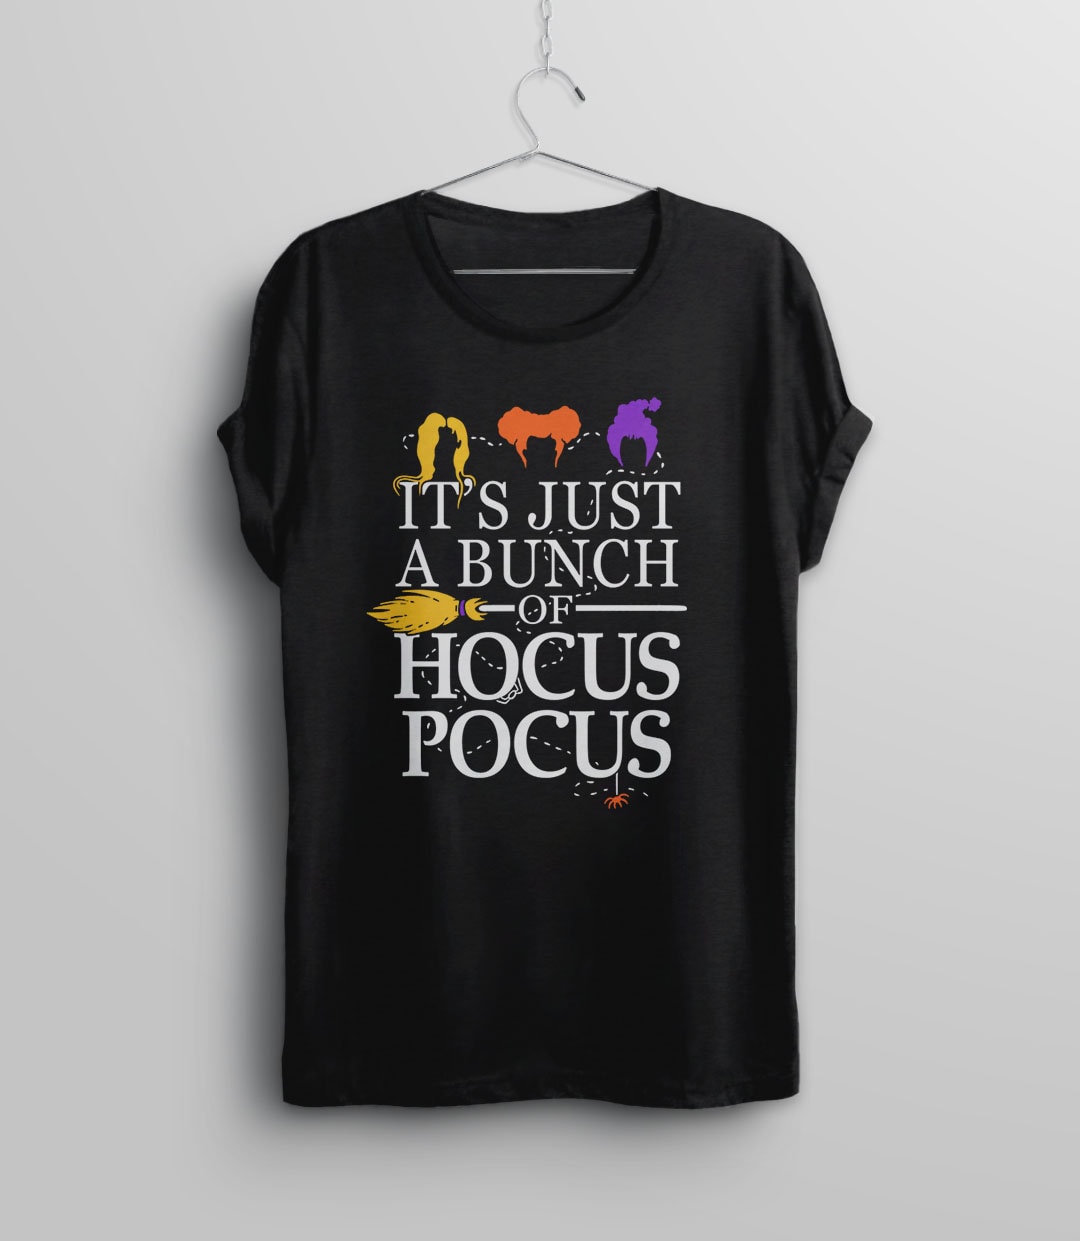 It's Just A Bunch of Hocus Pocus Shirt Women Funny Graphic Tee T-Shirt Halloween Short Sleeve T Shirts Top 